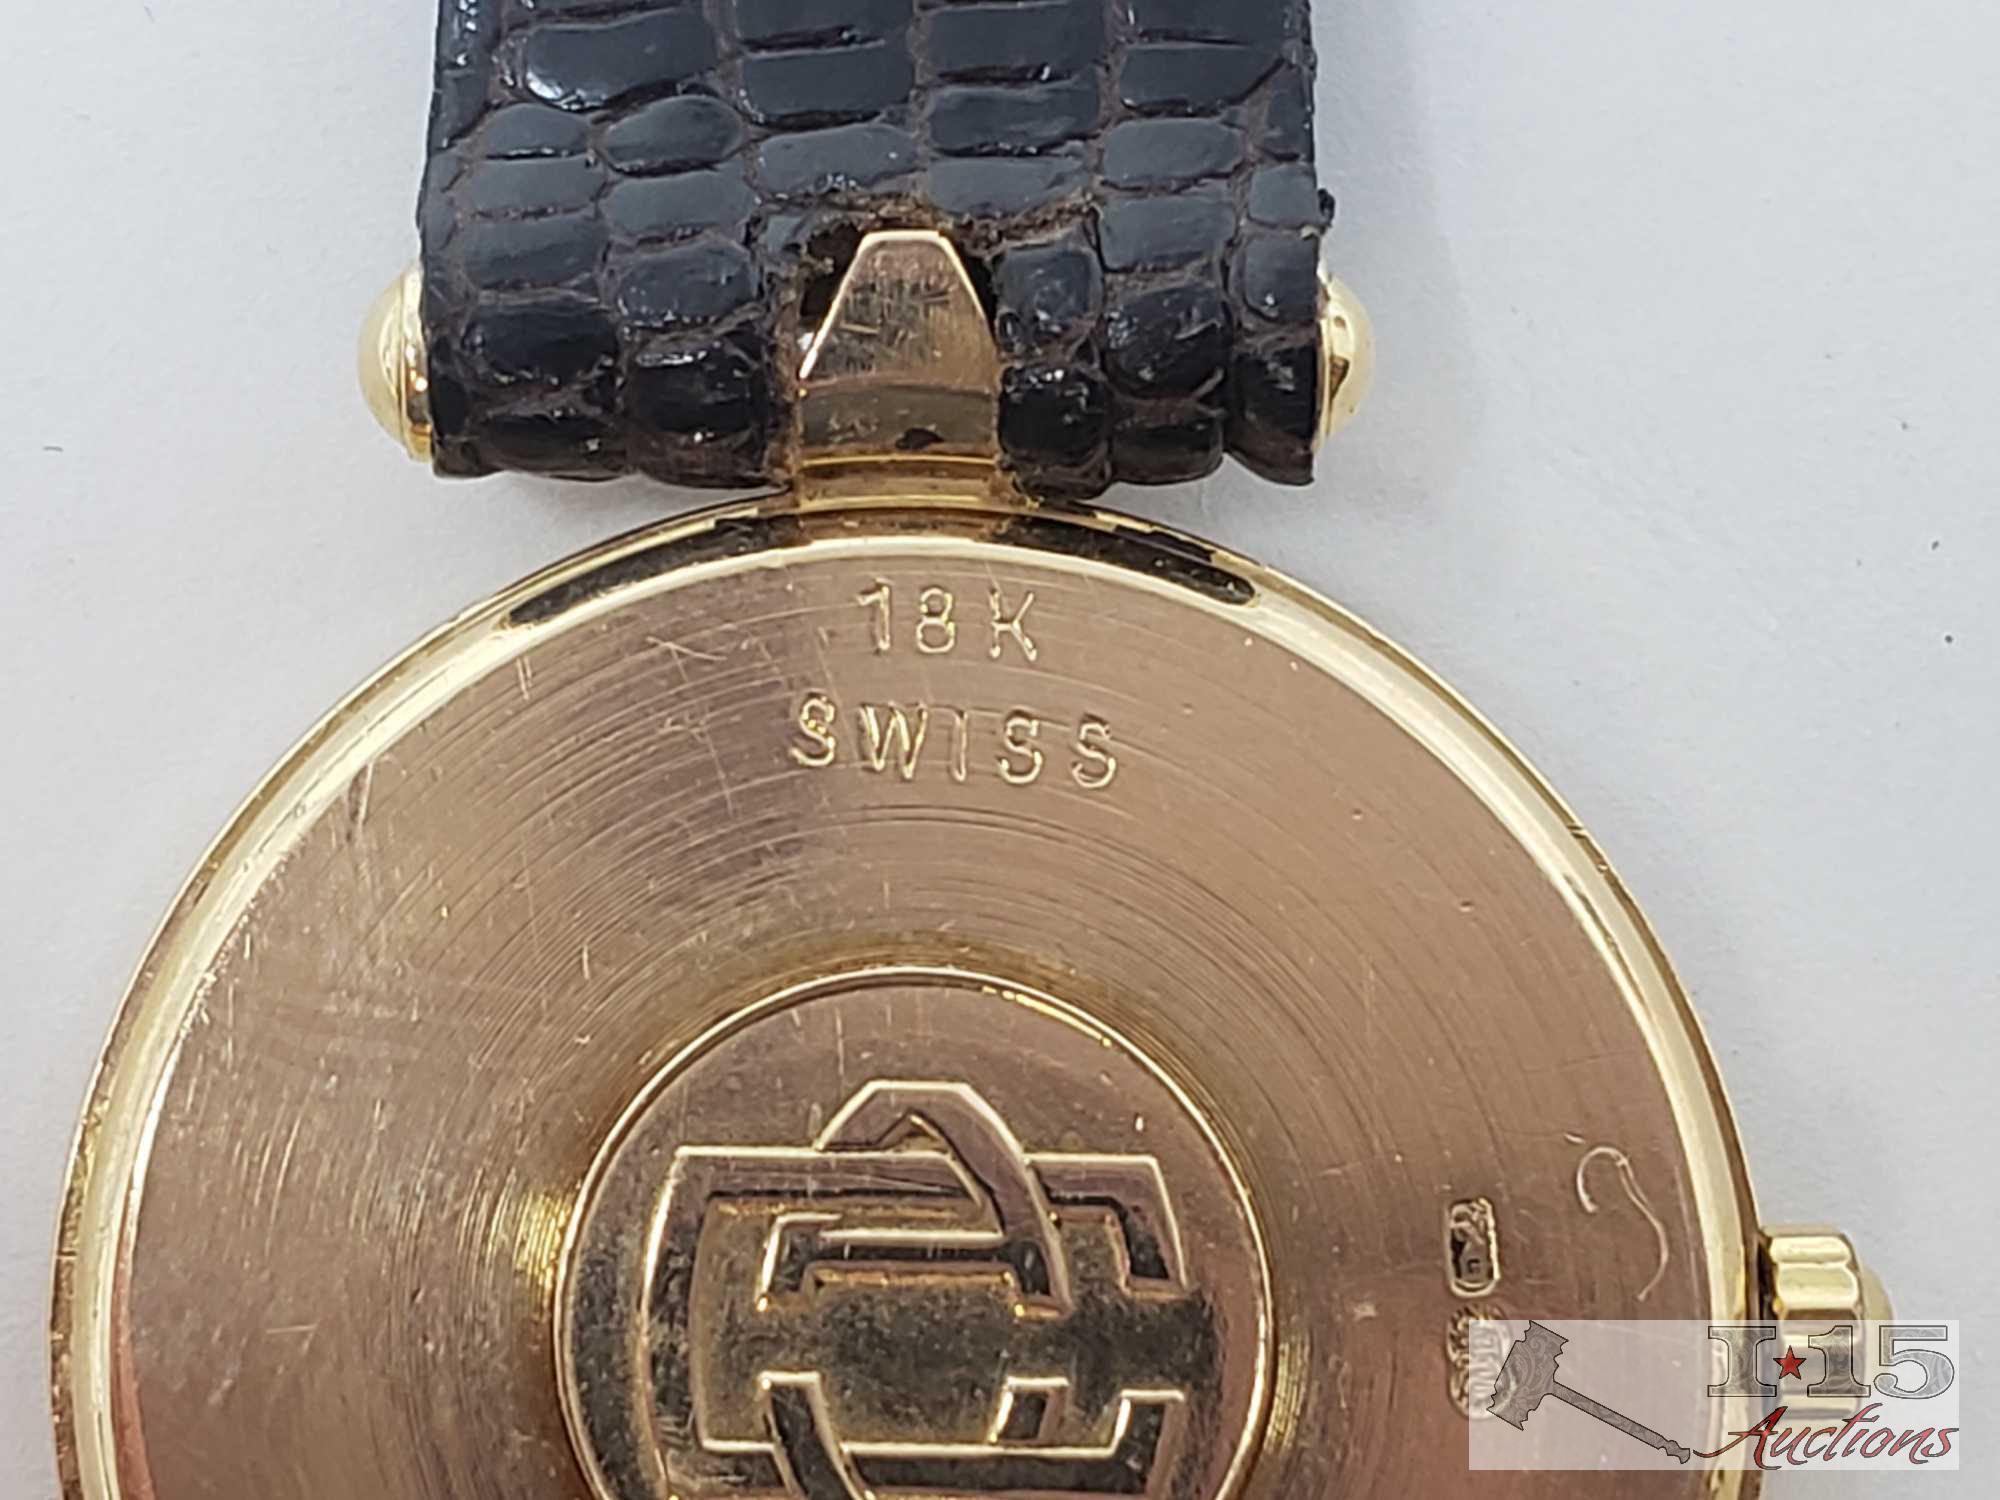 Ladies Van Cleef & Aprels 18k Gold Watch with Accent Diamonds - Appraised Value $4,500